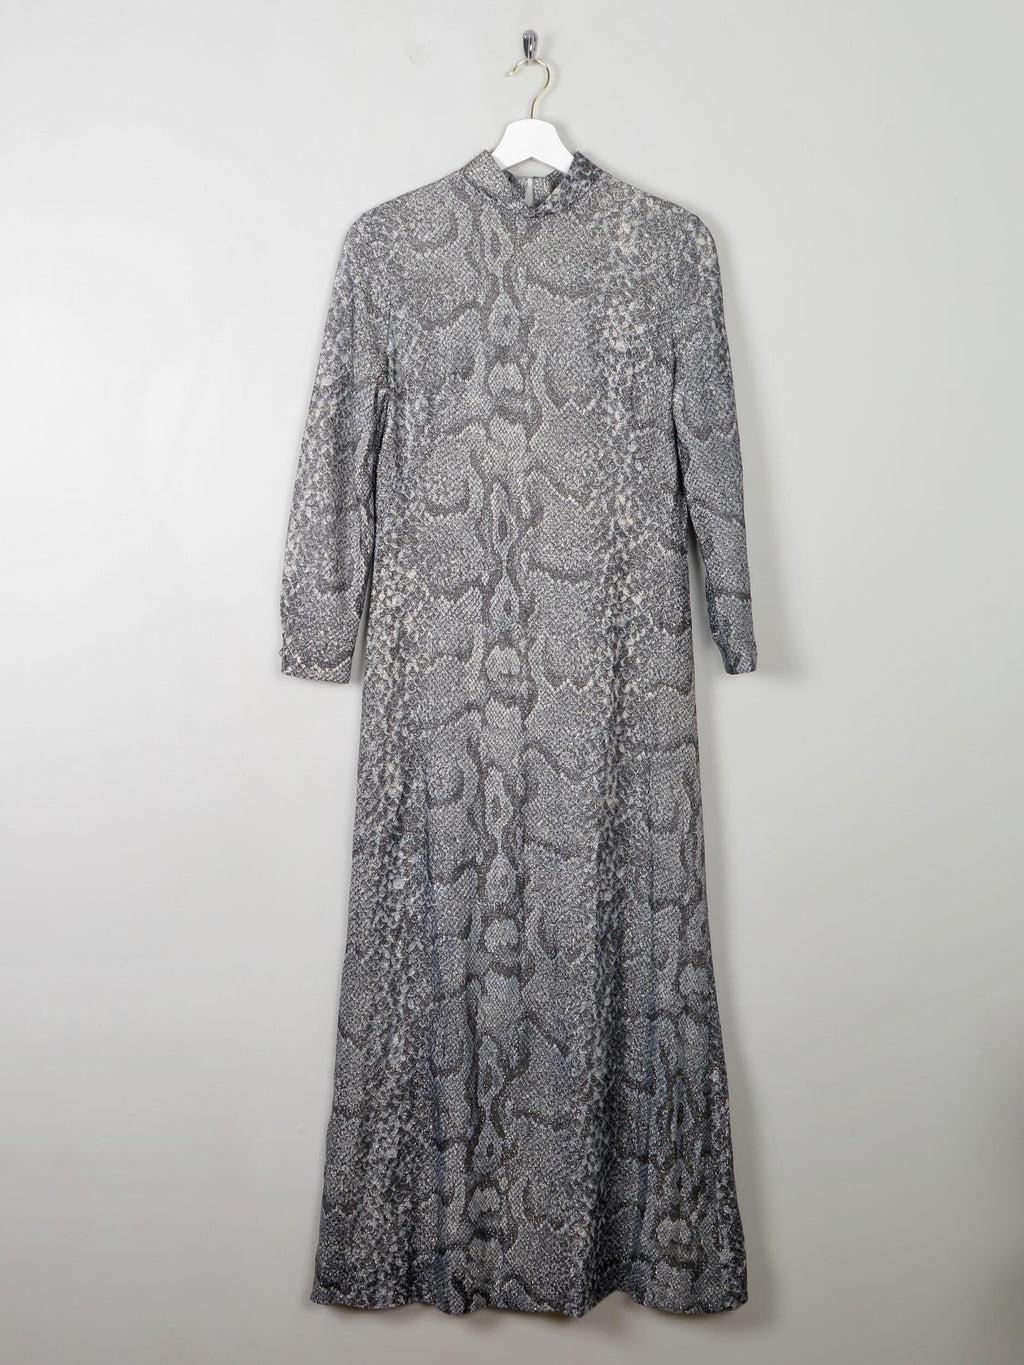 Silver Vintage Snakeskin Print Maxi Dress S - The Harlequin